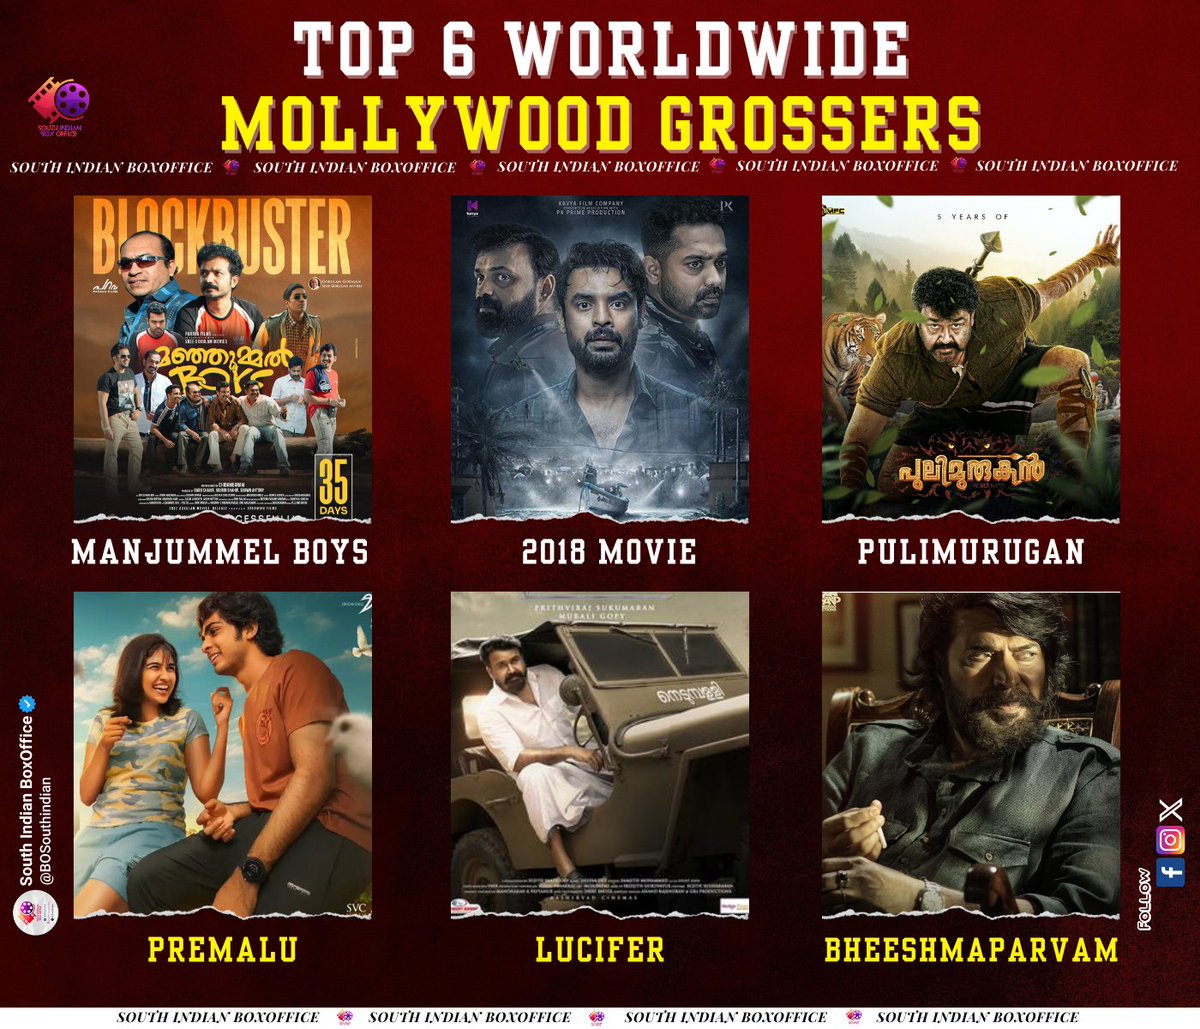 Top 6 Worldwide Mollywood Grossers

1. #ManjummelBoys
2. #2018Movie
3. #Pulimurugan
4. #PremaluMovie
5. #Lucifer
6. #BheeshmaParvam